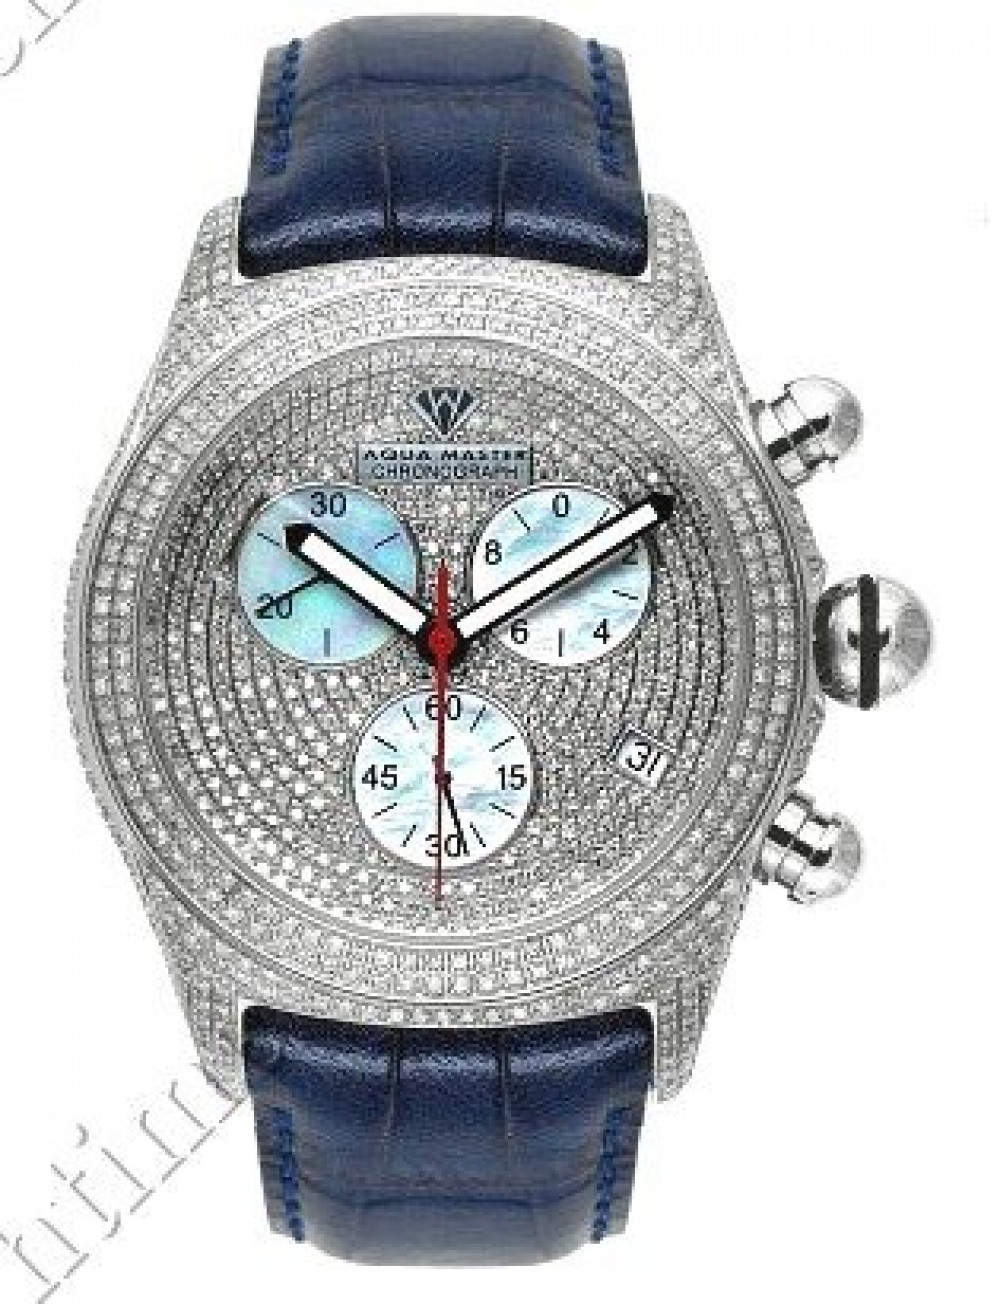 Zegarek firmy Aqua Master, model Luxury